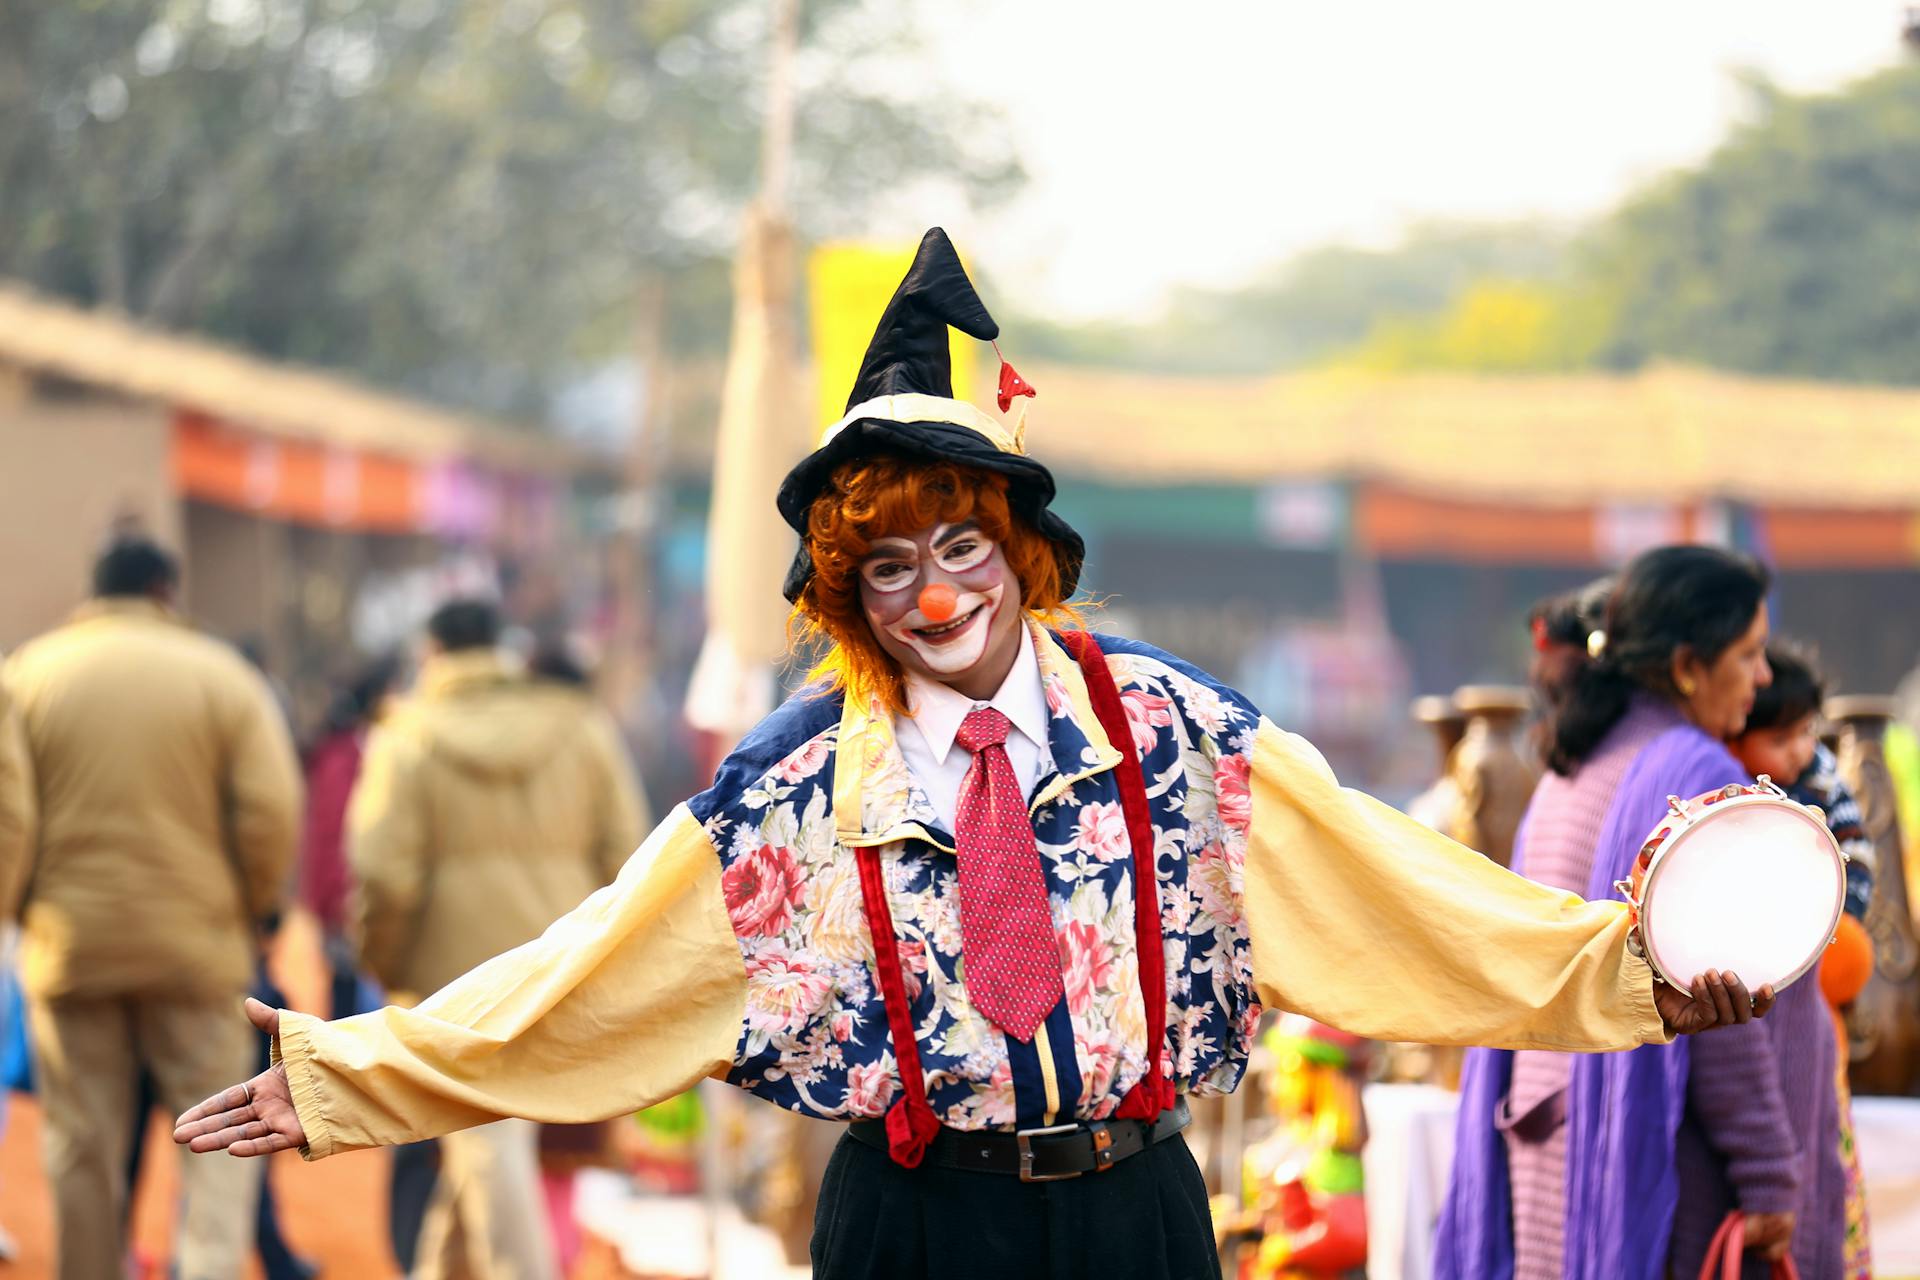 A clown at a circus | Source: Pexels